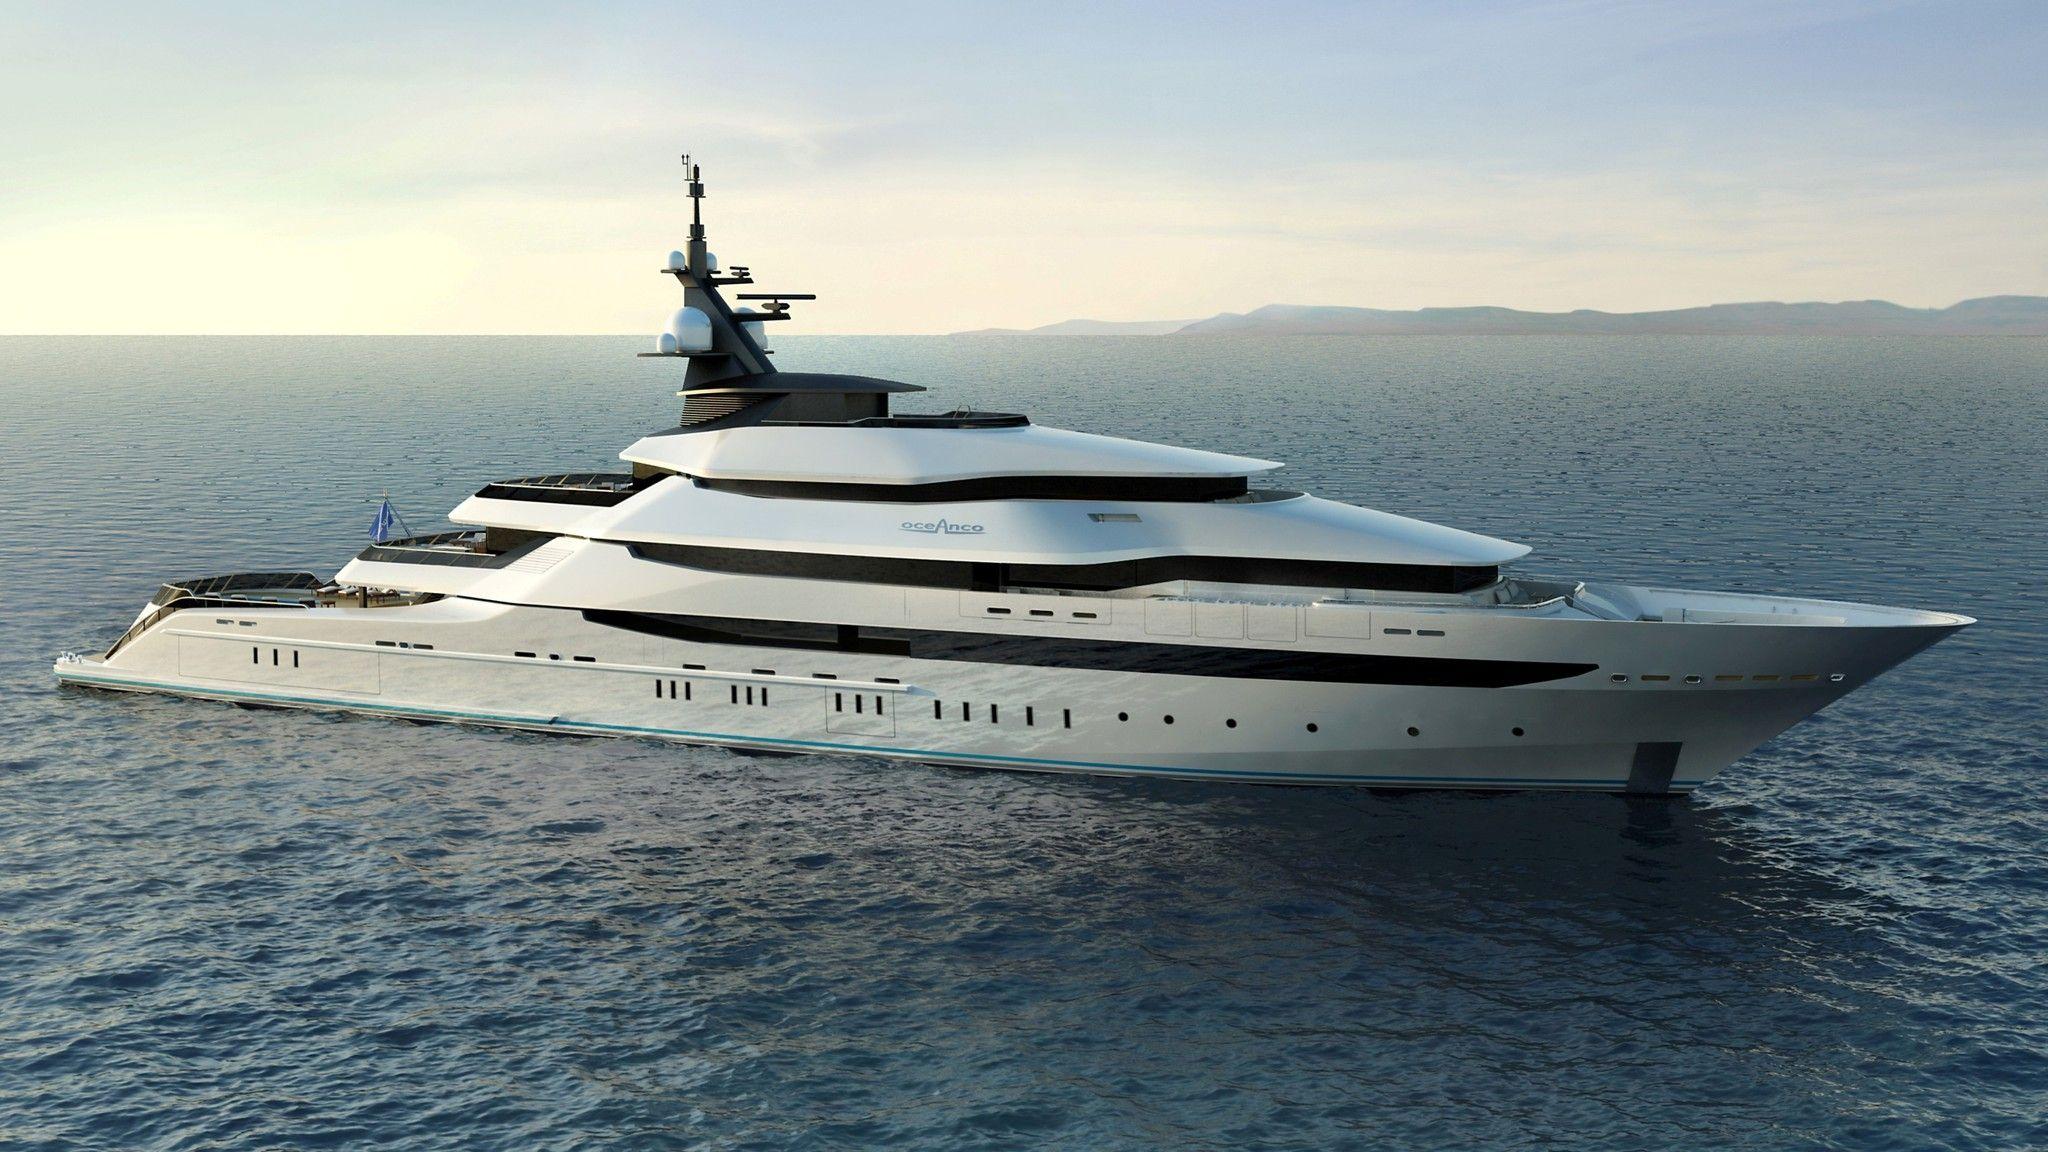 Ocean cgi yachts luxury boats oceanco sea wallpapers